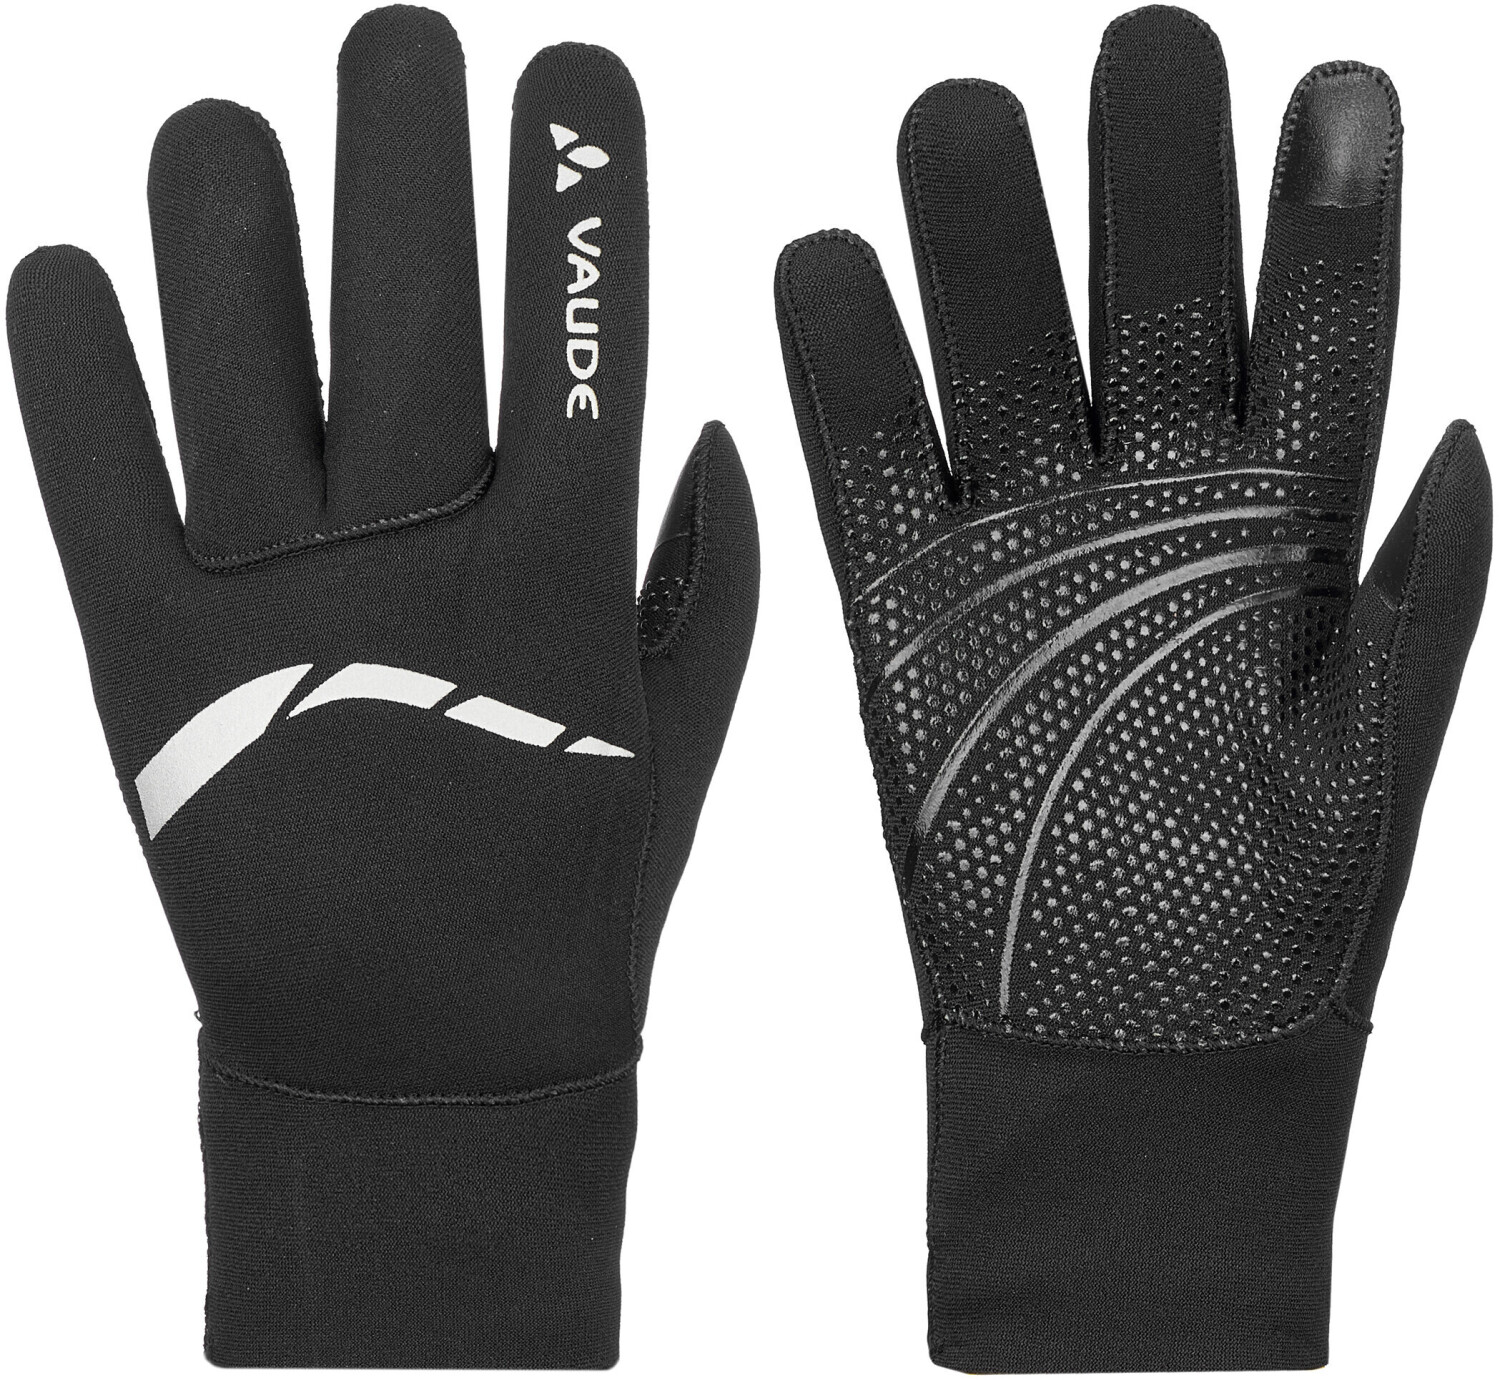 € VAUDE bei Chronos | Gloves black 16,78 Preisvergleich ab